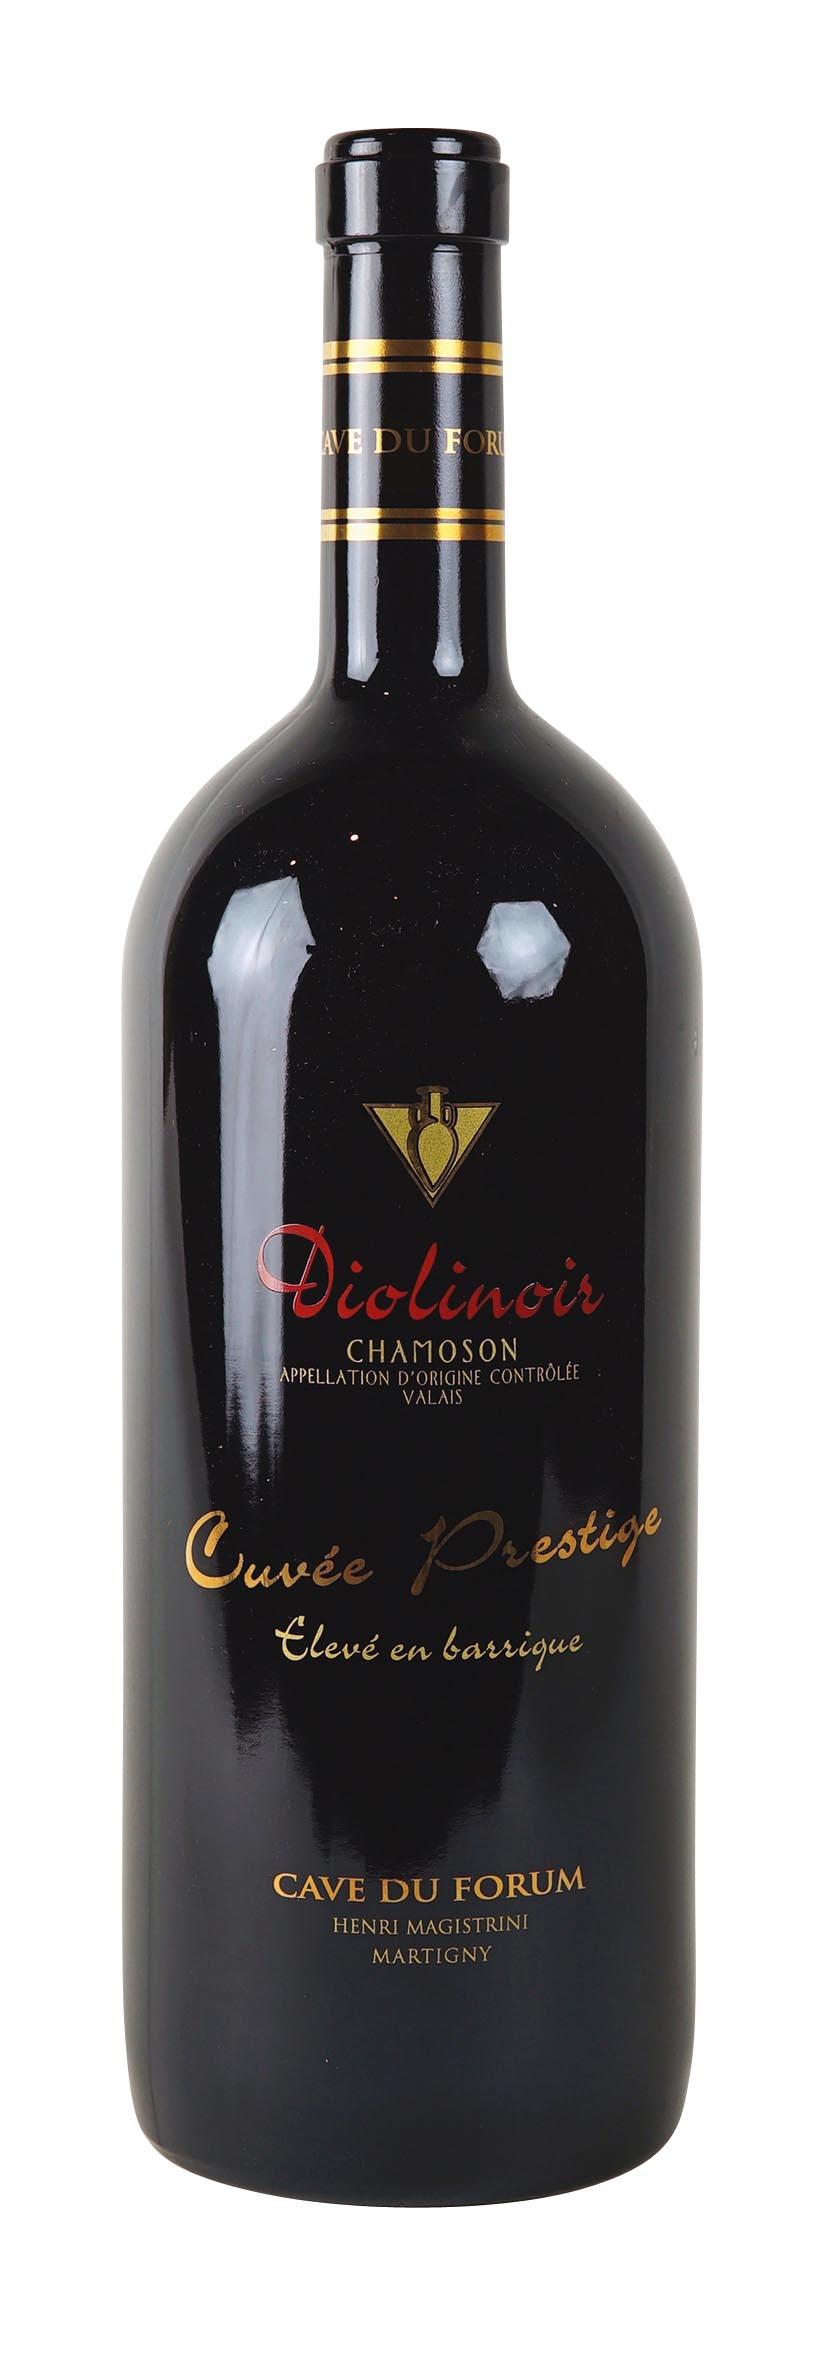 Valais AOC Diolinoir Cuvée Prestige 2015